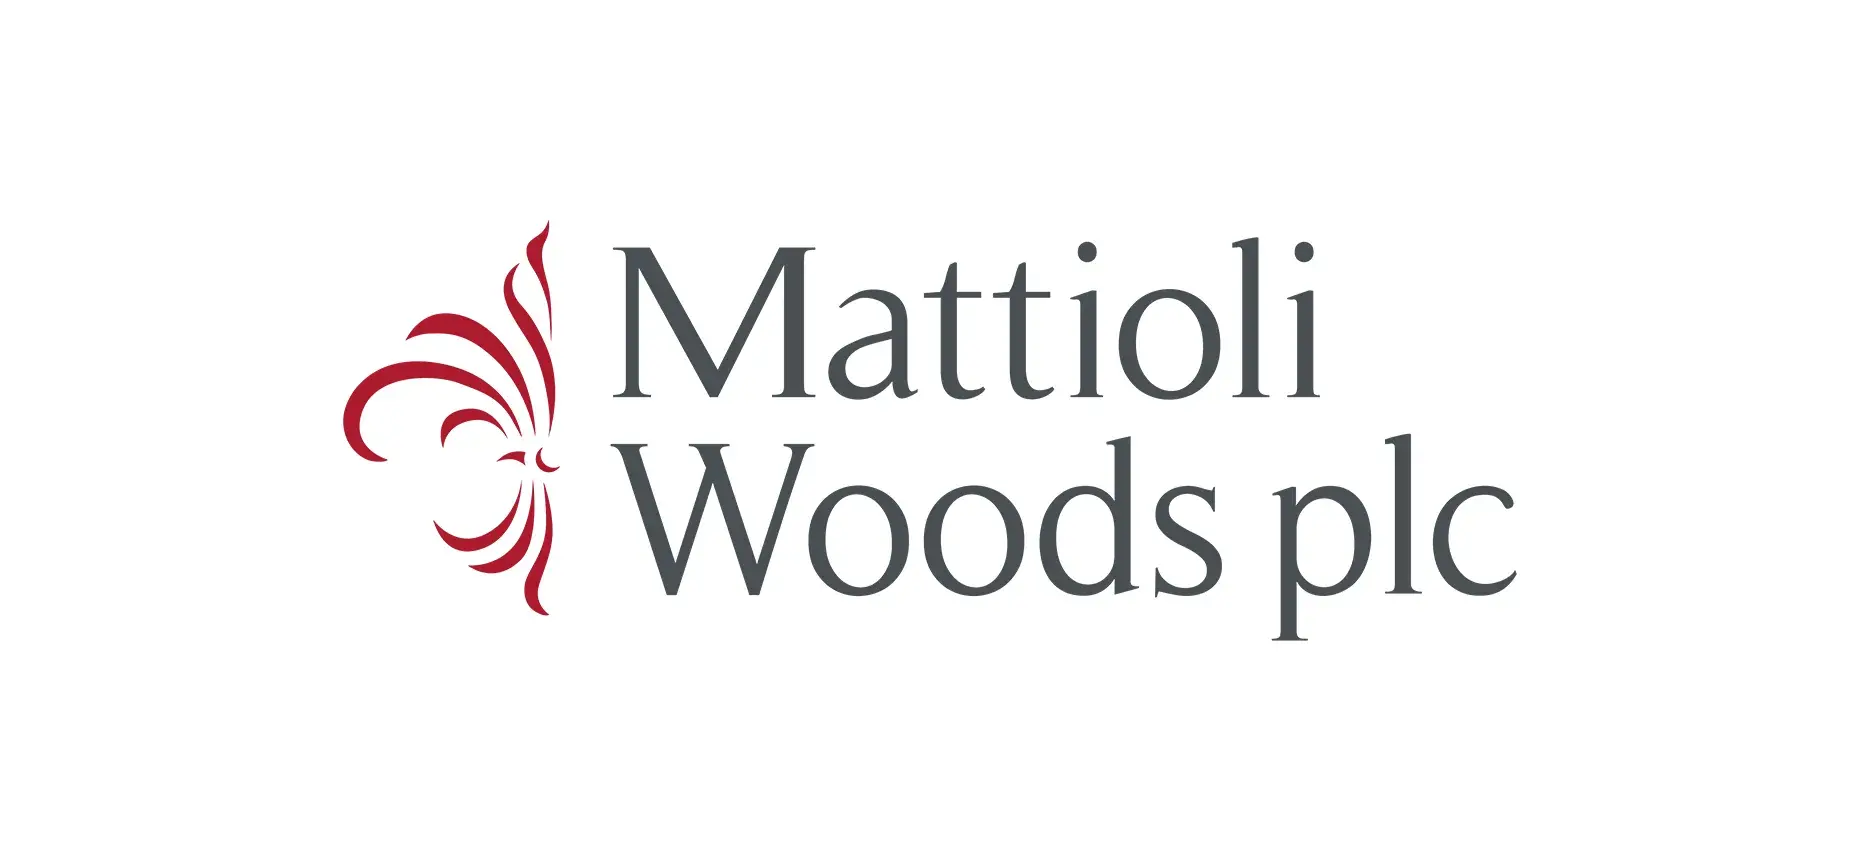 Mattioli Woods plc